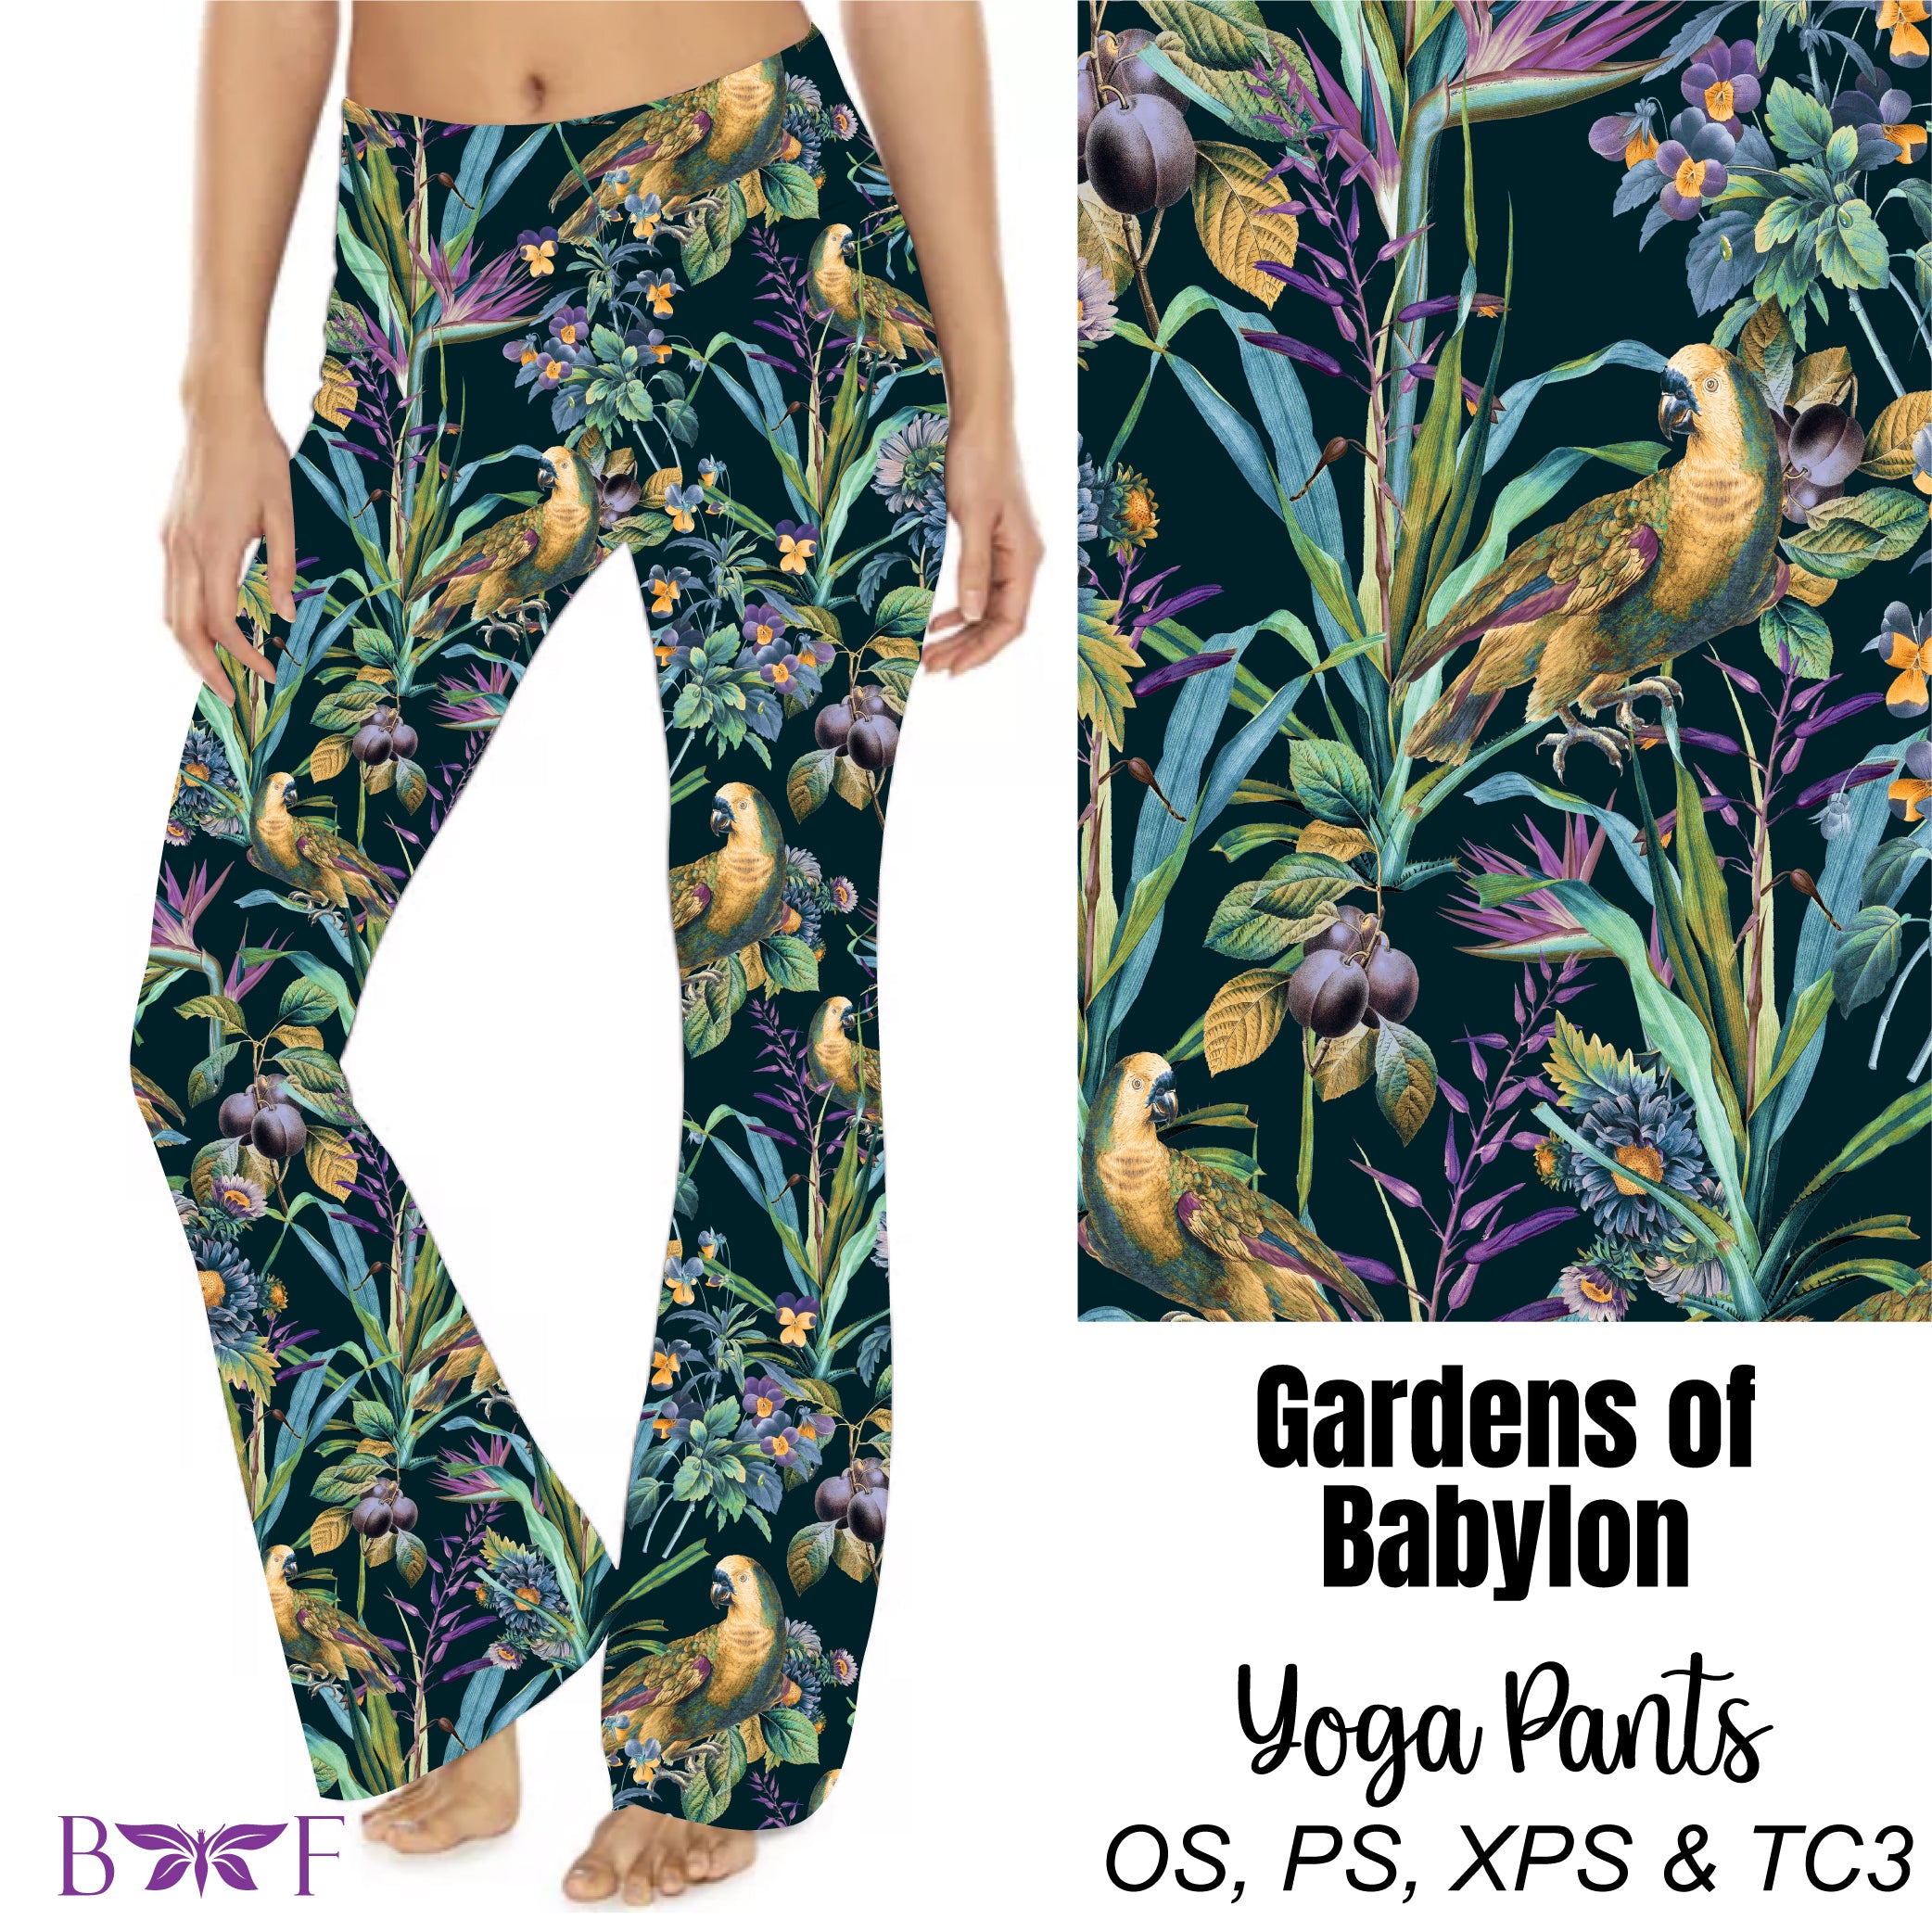 Gardens of Babylon yoga pants